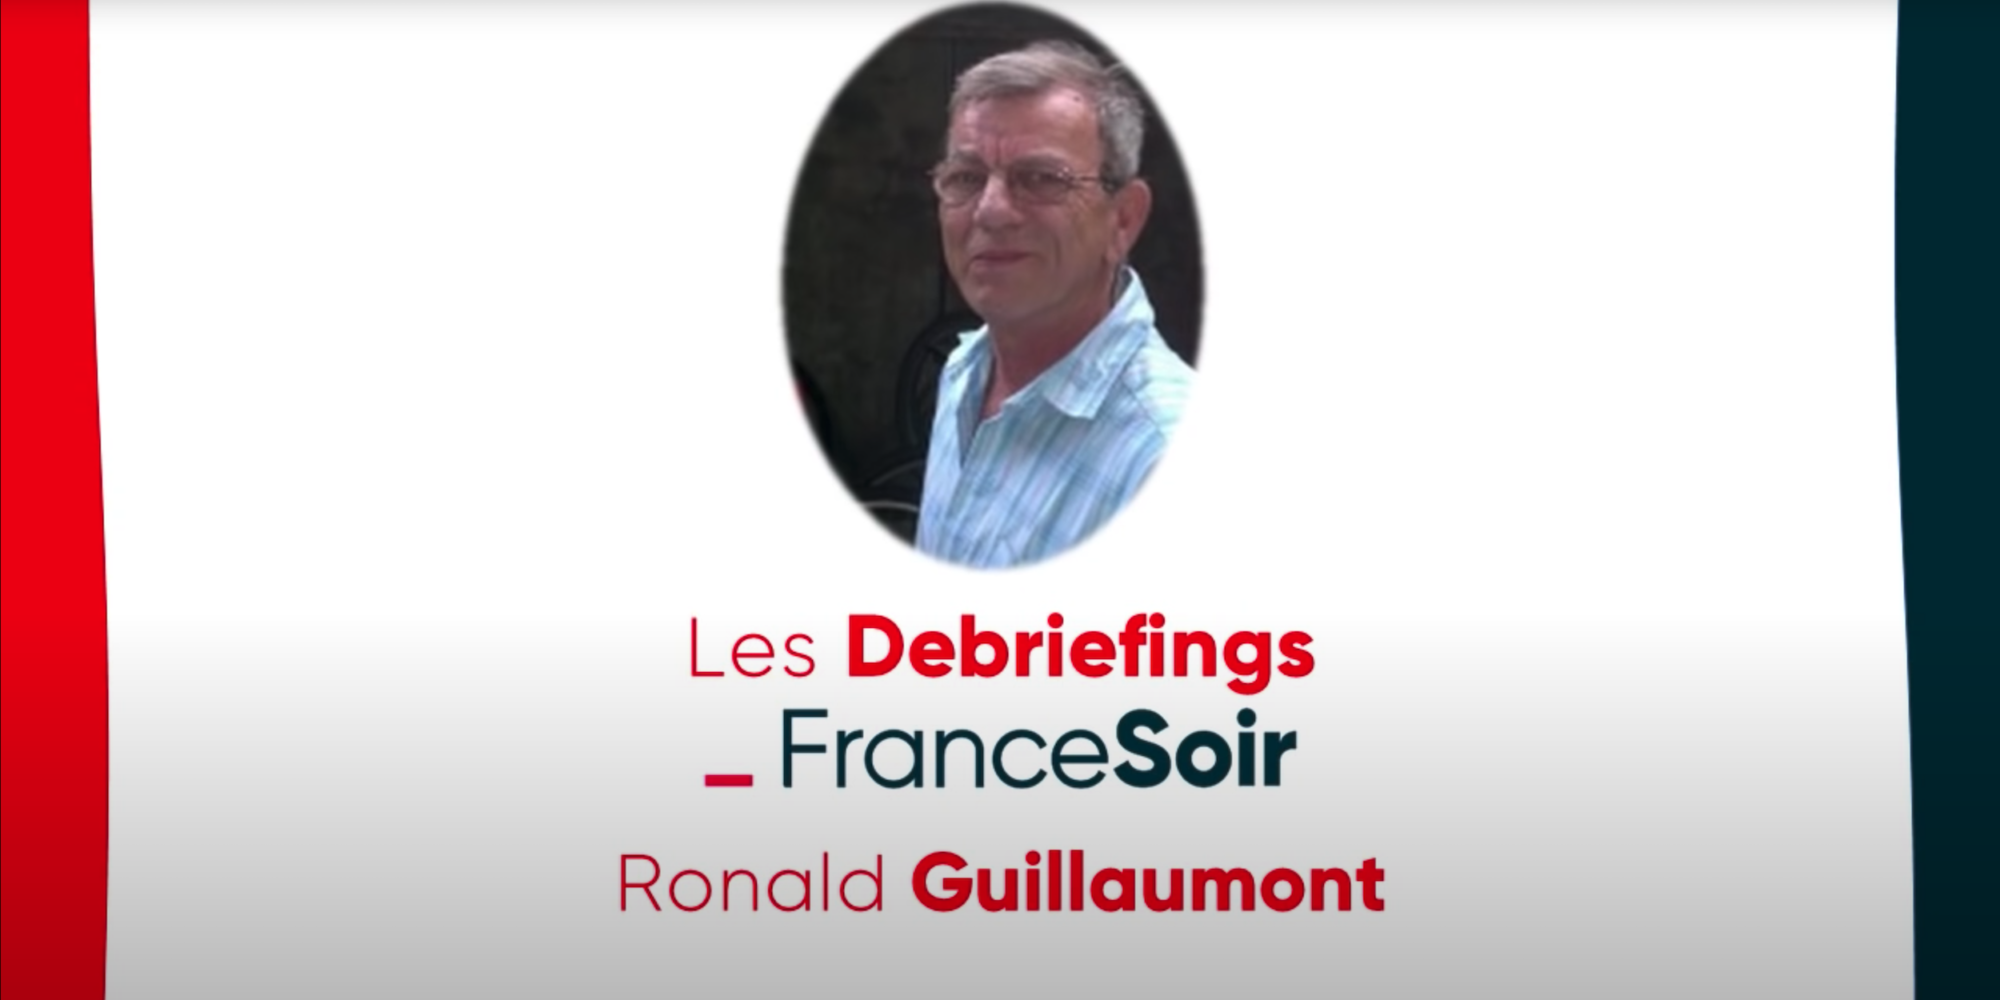 Ronald Guillaumont